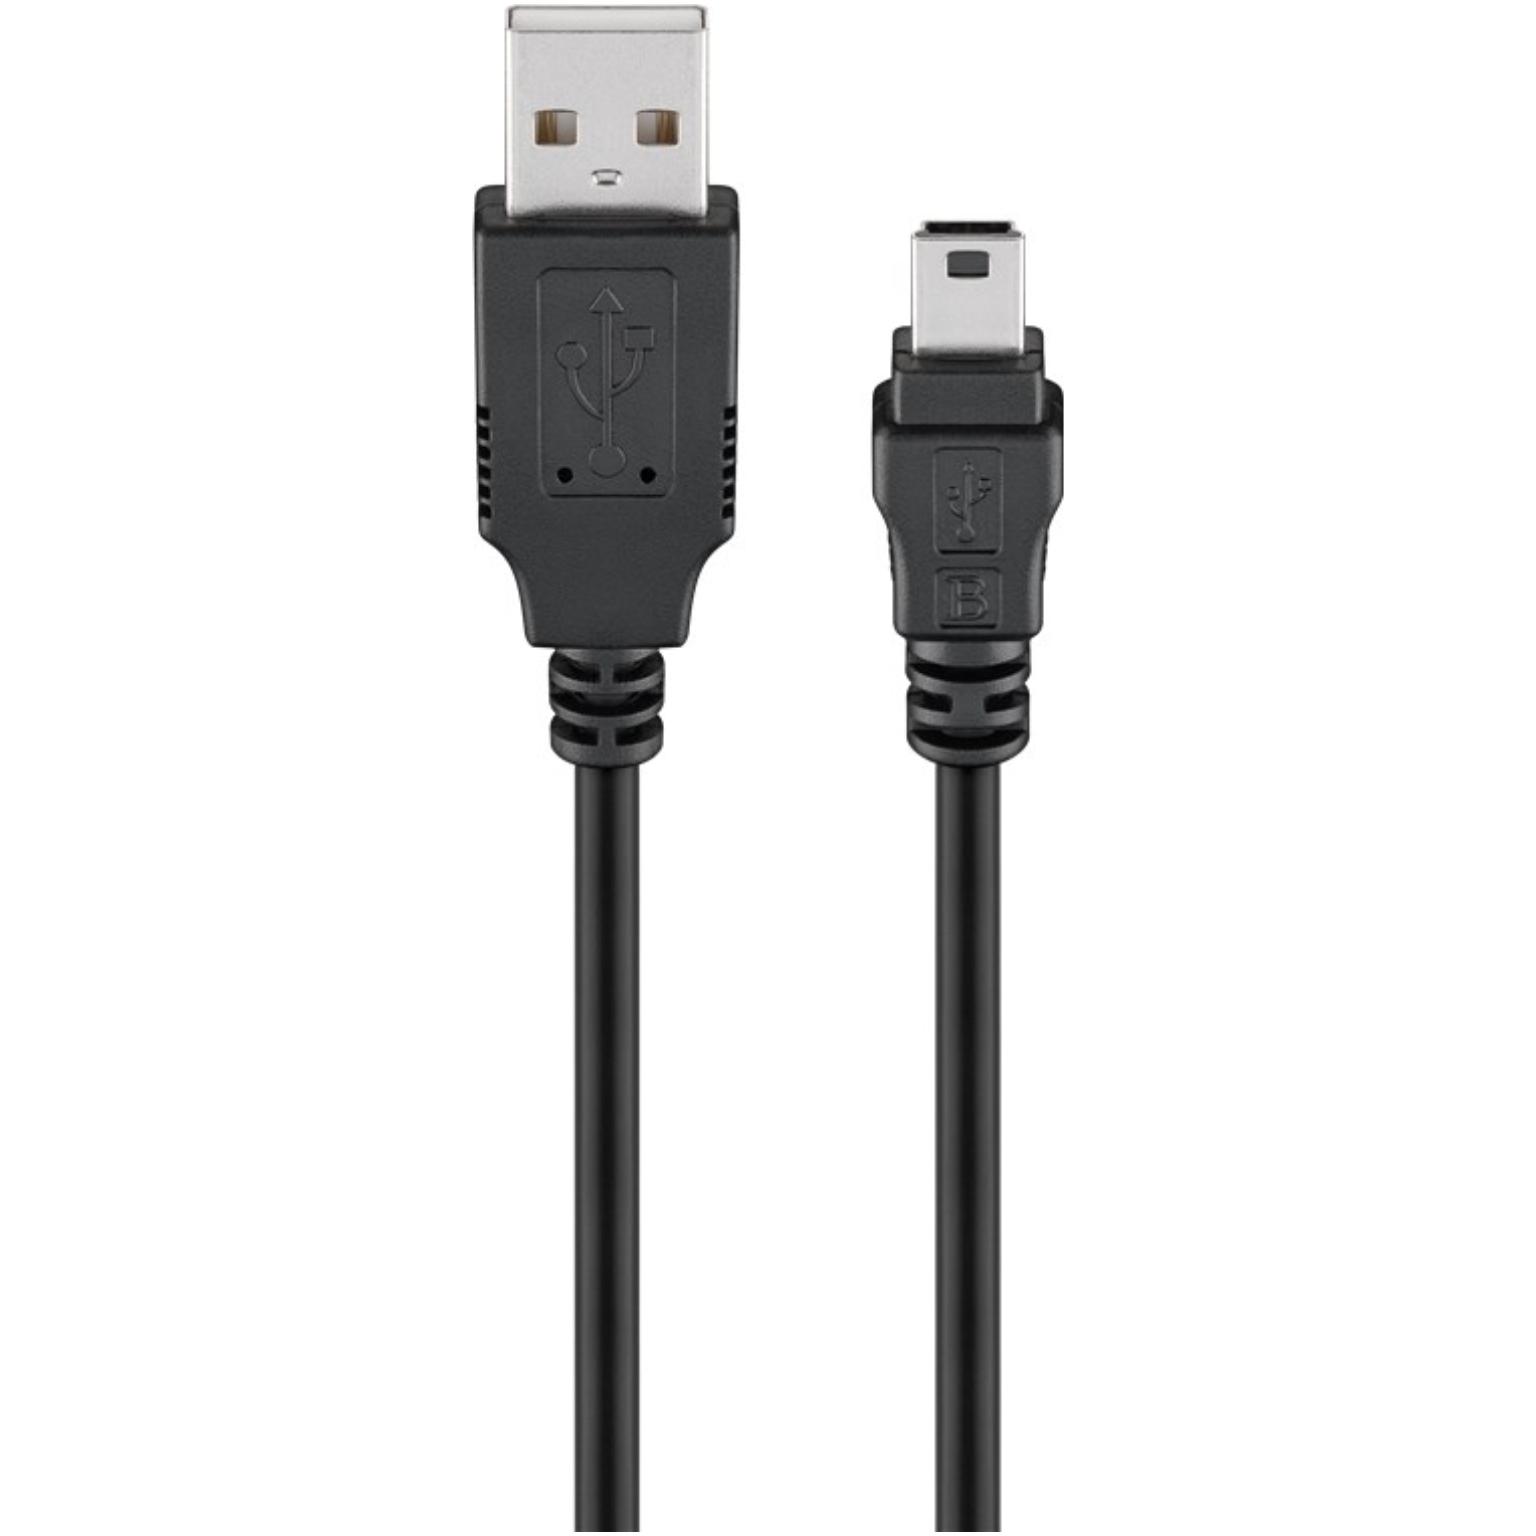 Mini USB 2.0 Kabel kaufen 